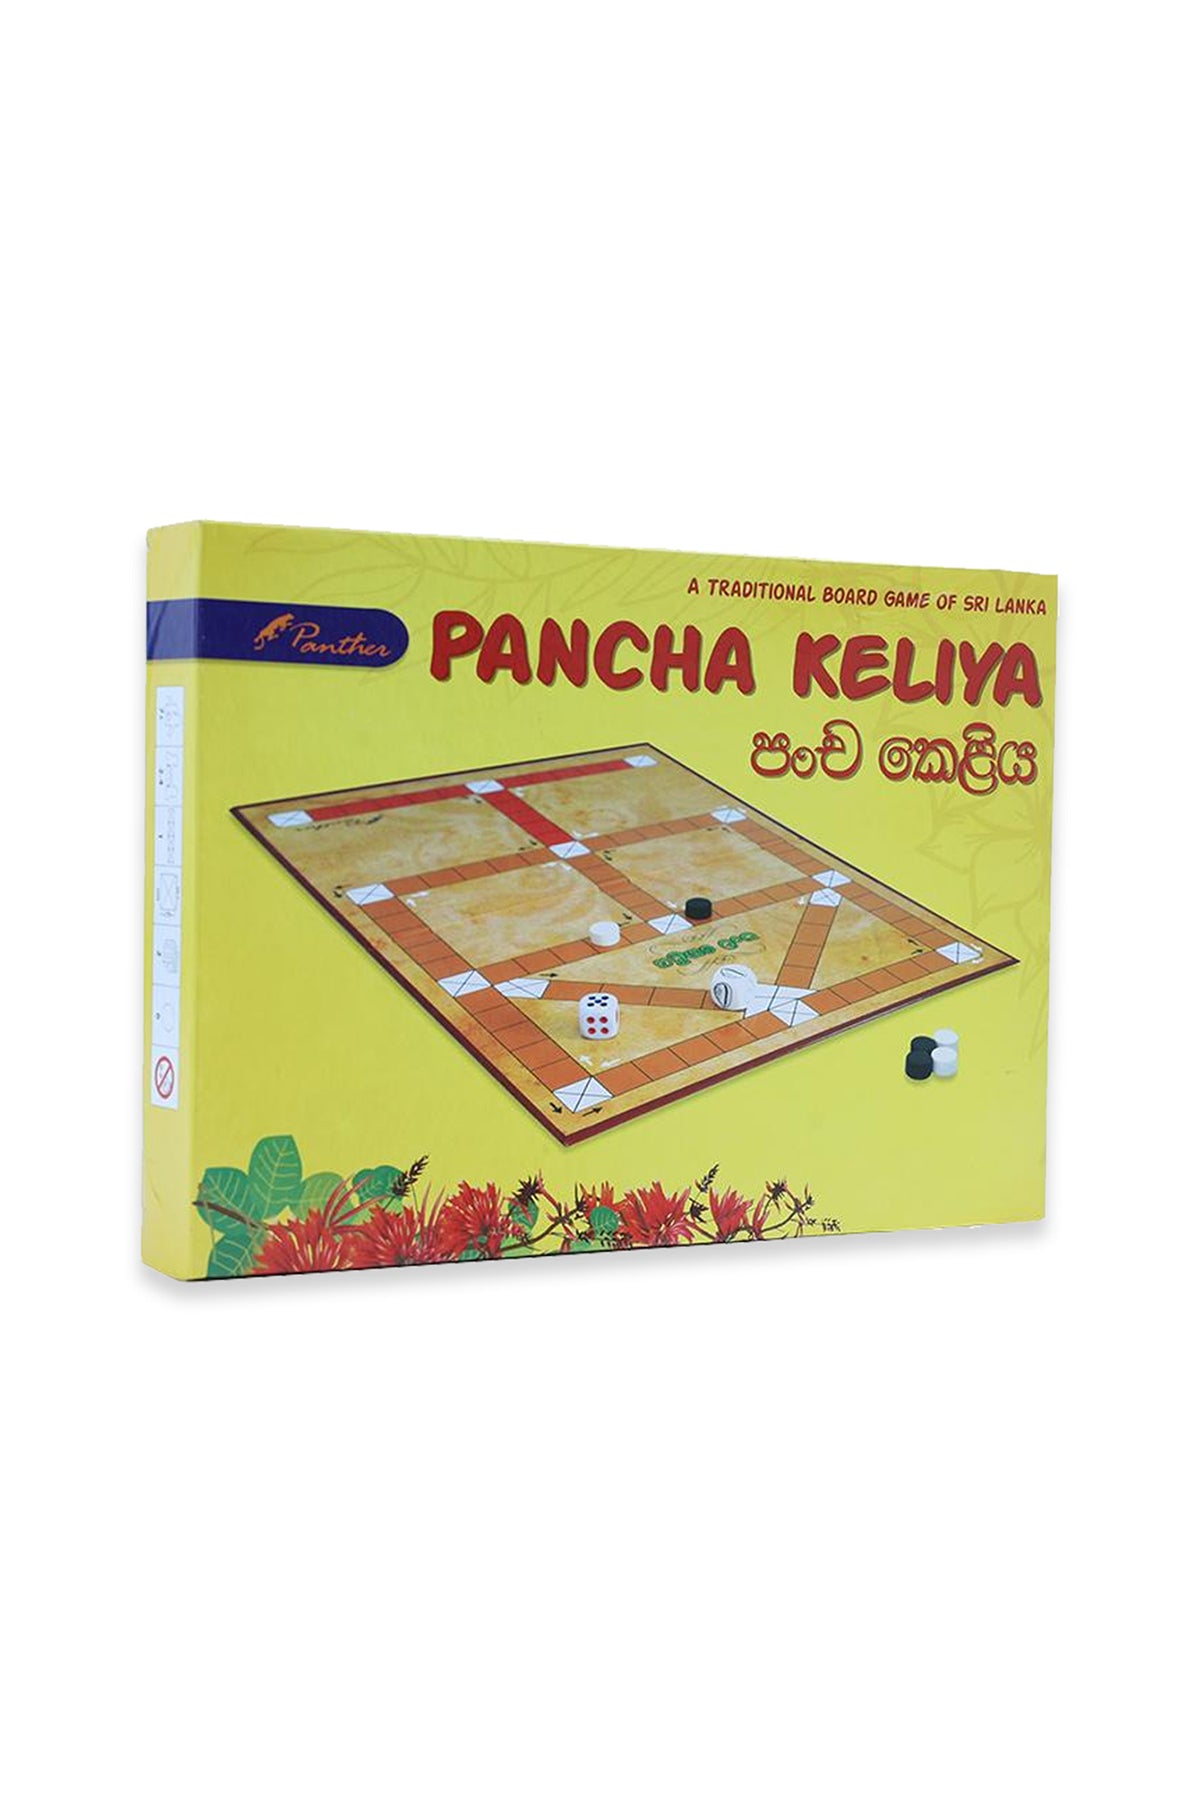 Pancha Keliya